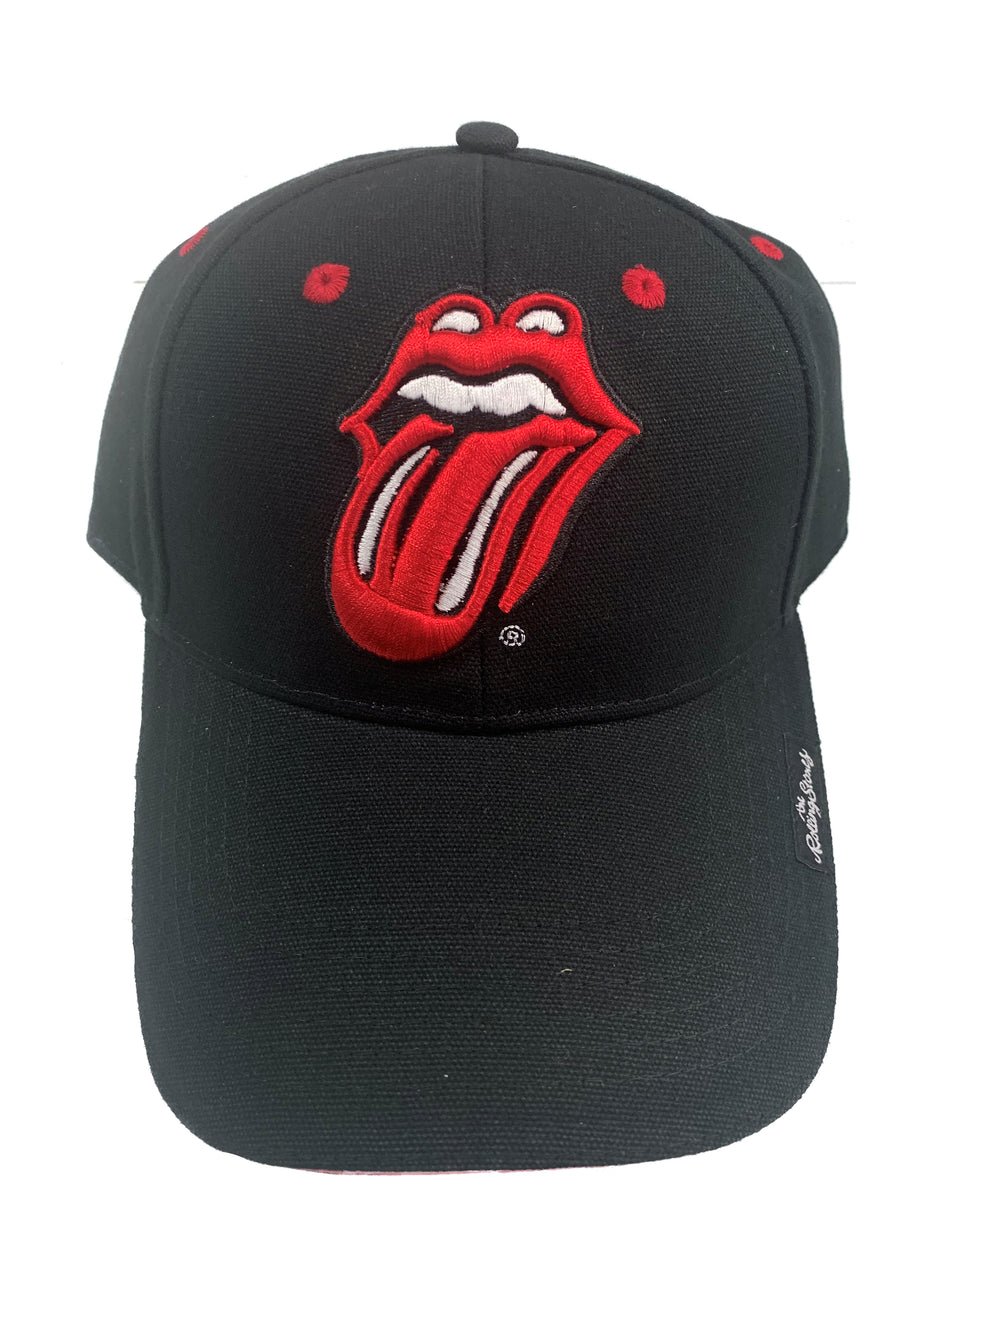 Rolling Stones TONQUE Logo Cap Official Embroidered Peak Cap Adjustable Brand New